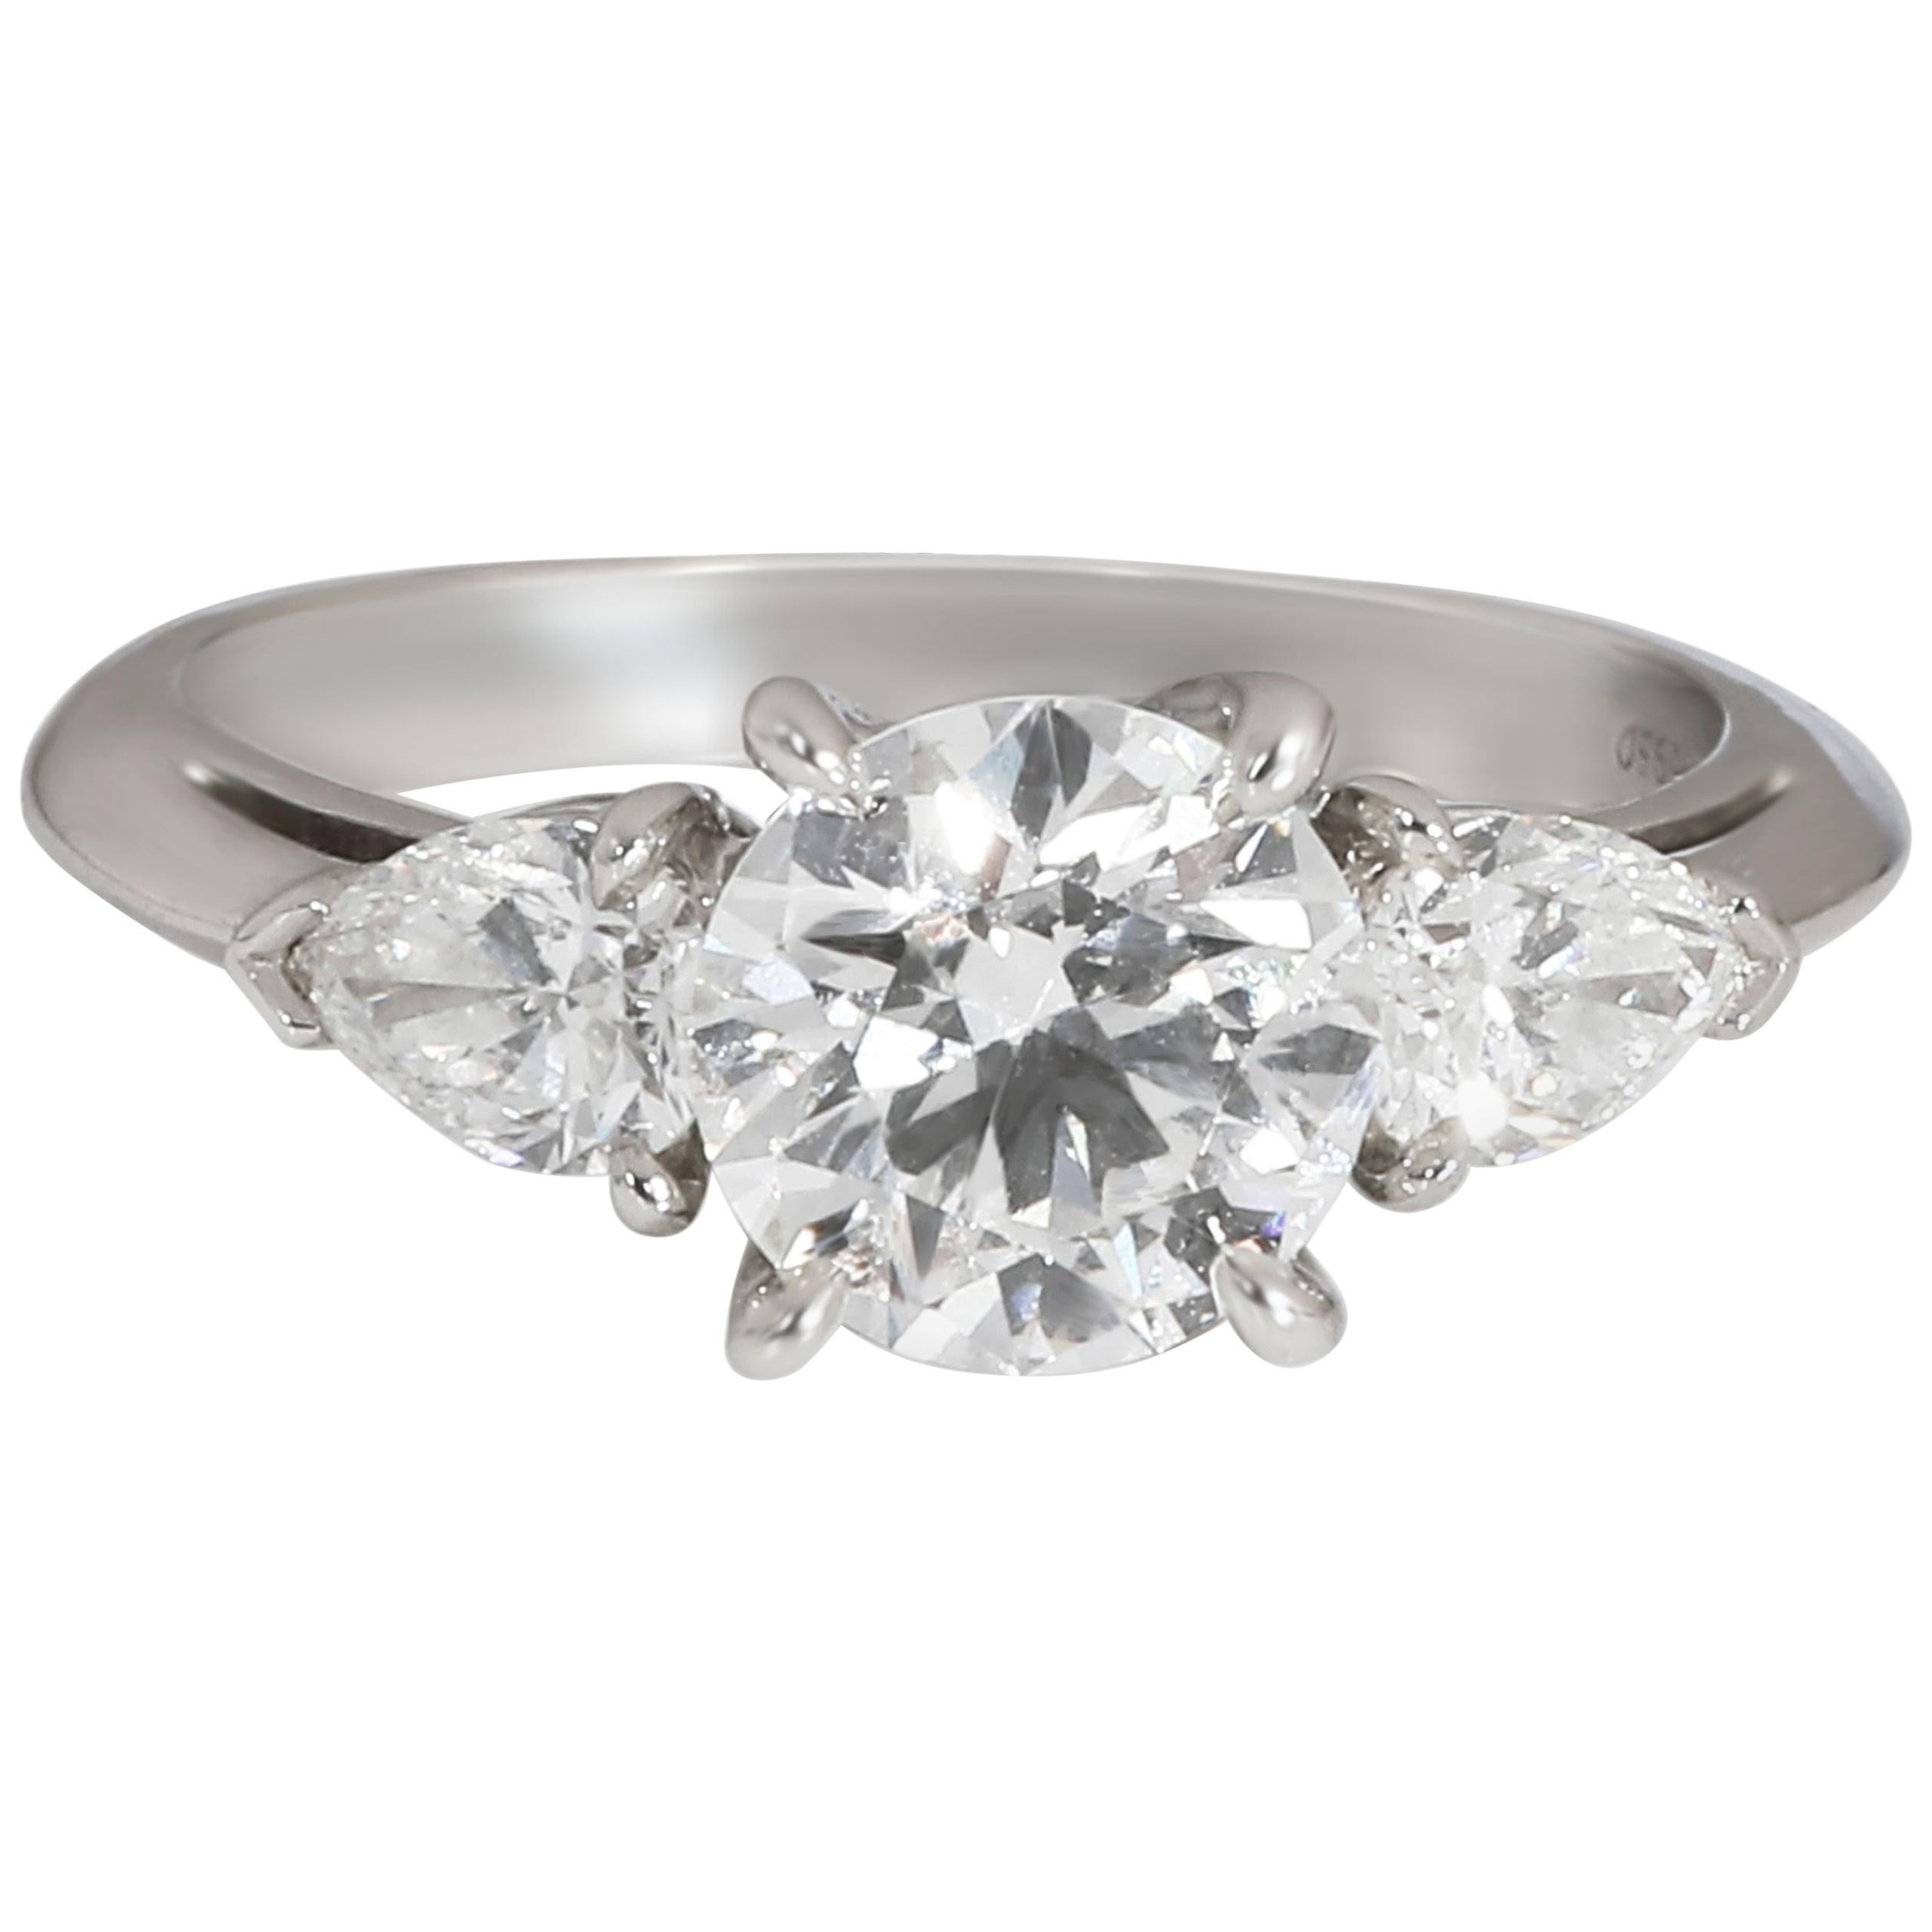 Tiffany & Co. Three-Stone Diamond Engagement Ring in Platinum F VS1 1.67 Carat